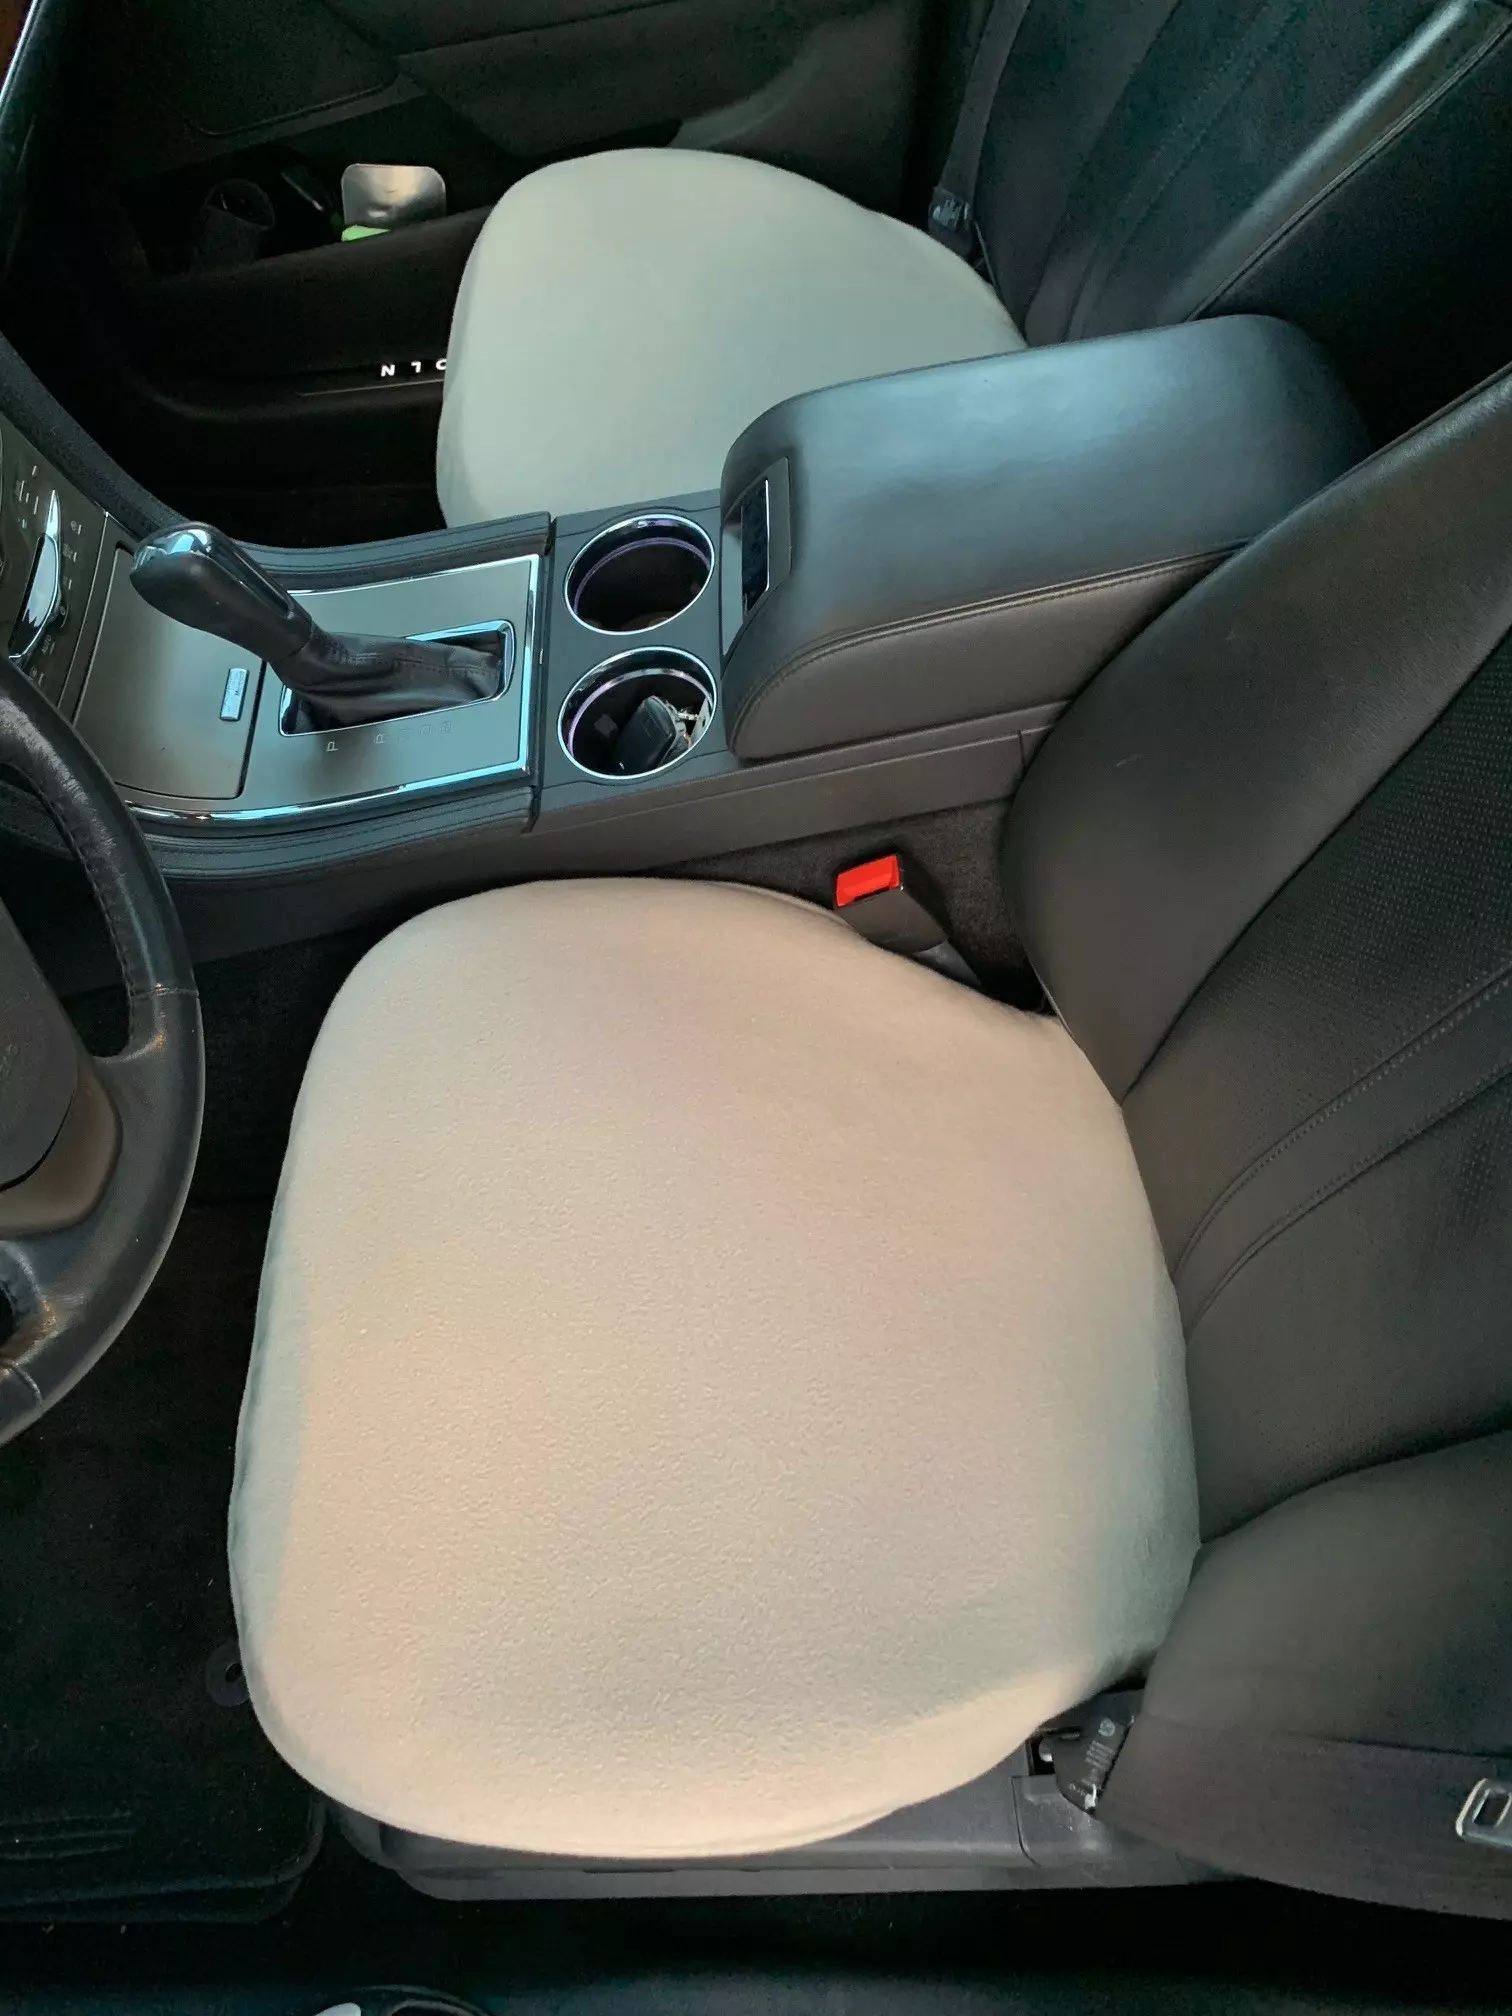 Fleece Bottom Seat Cover for Lexus GS350 2005-17 (PAIR)